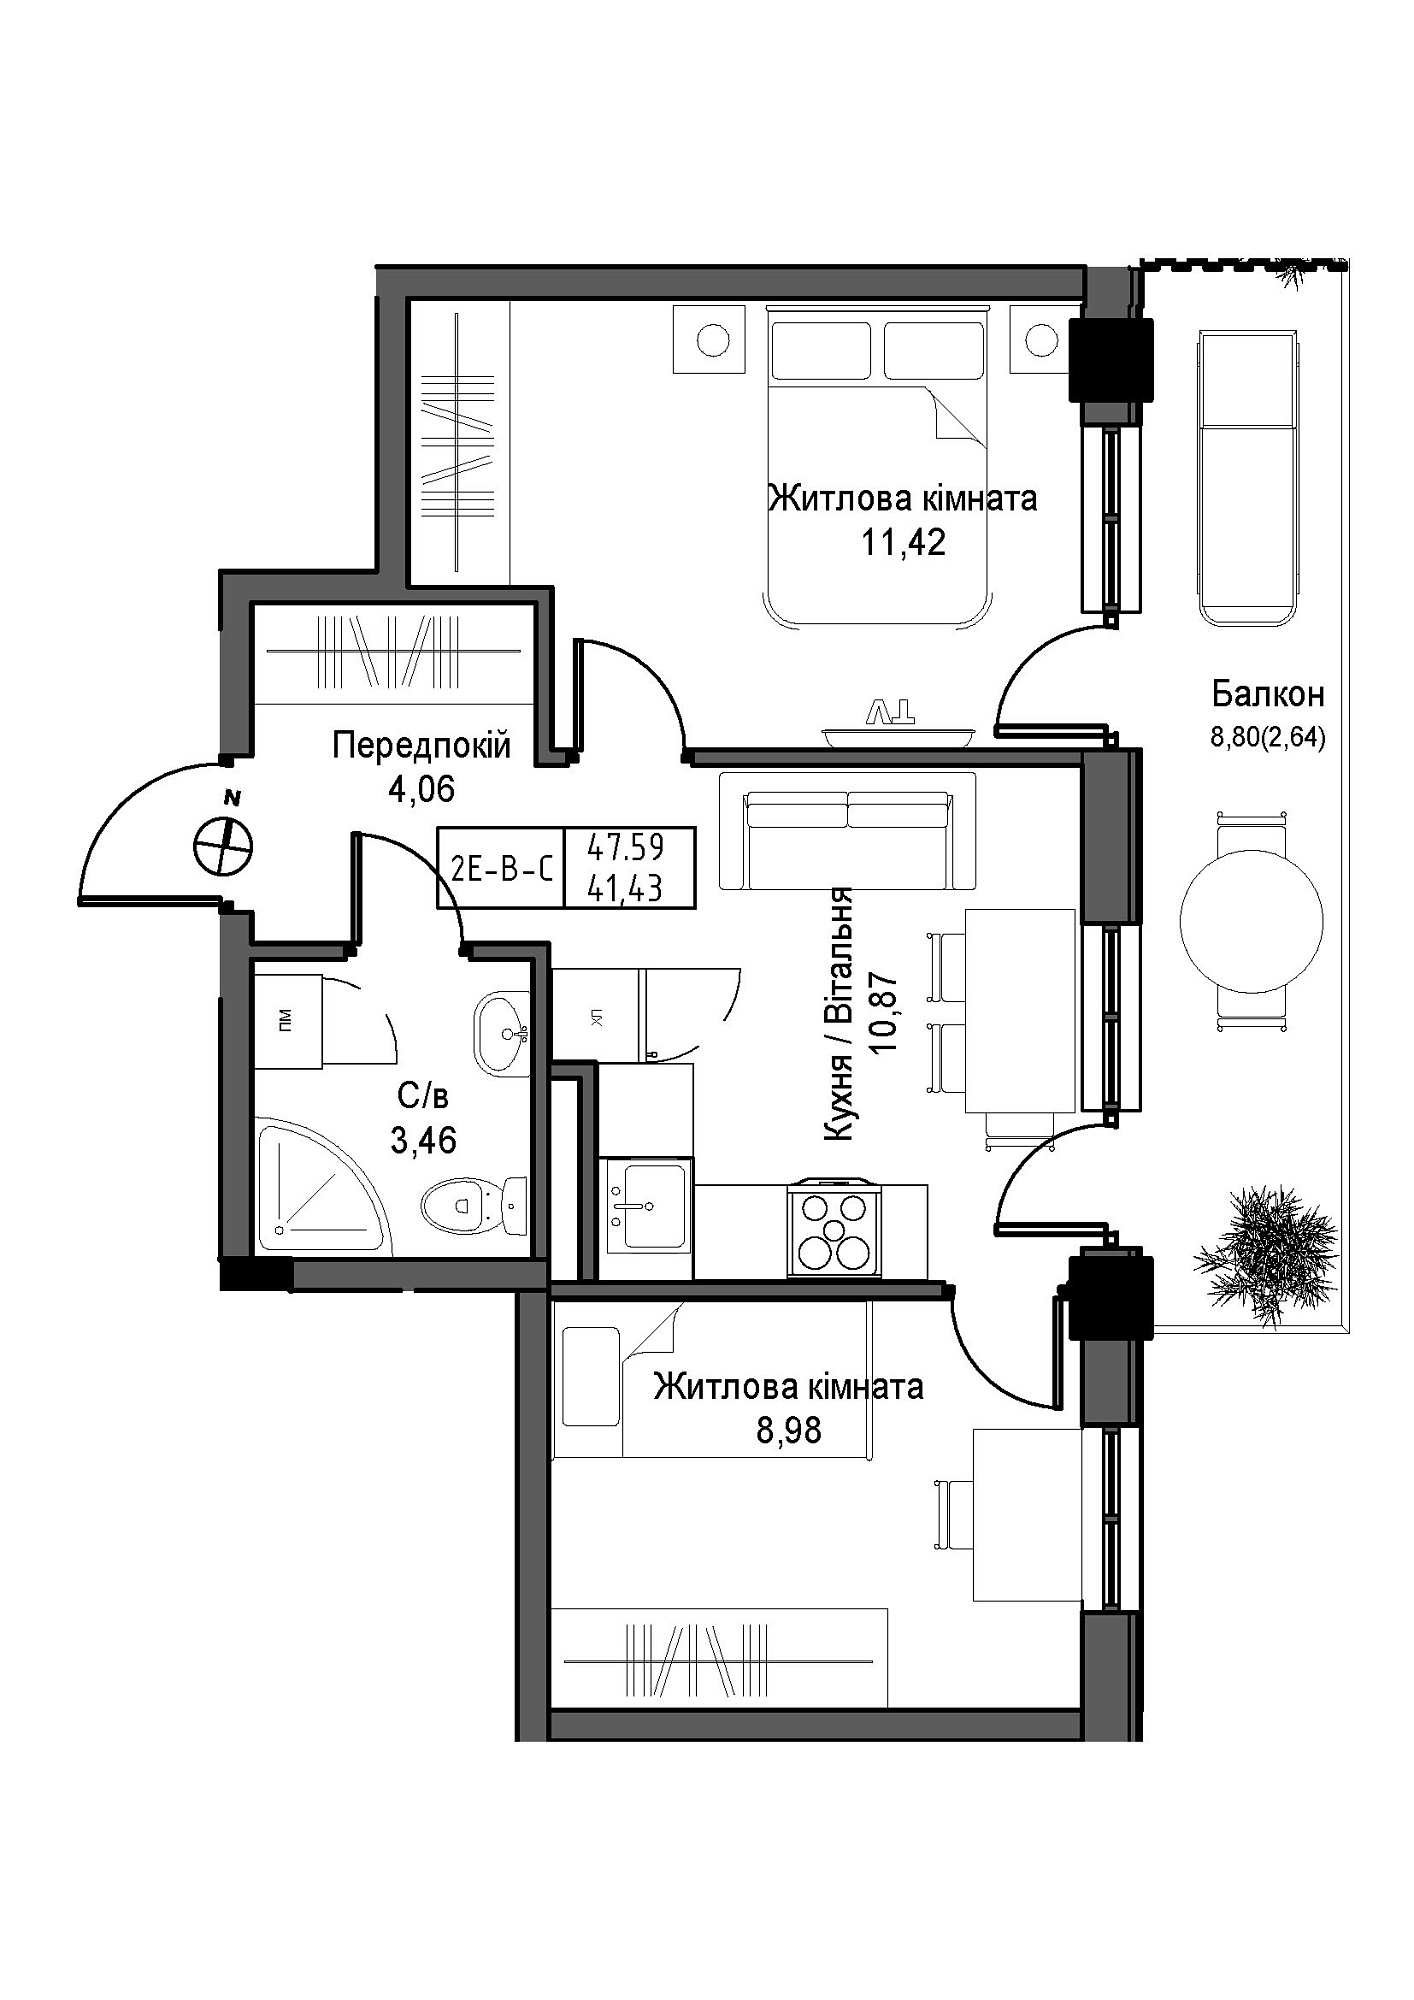 Planning 2-rm flats area 41.43m2, UM-007-11/0007.